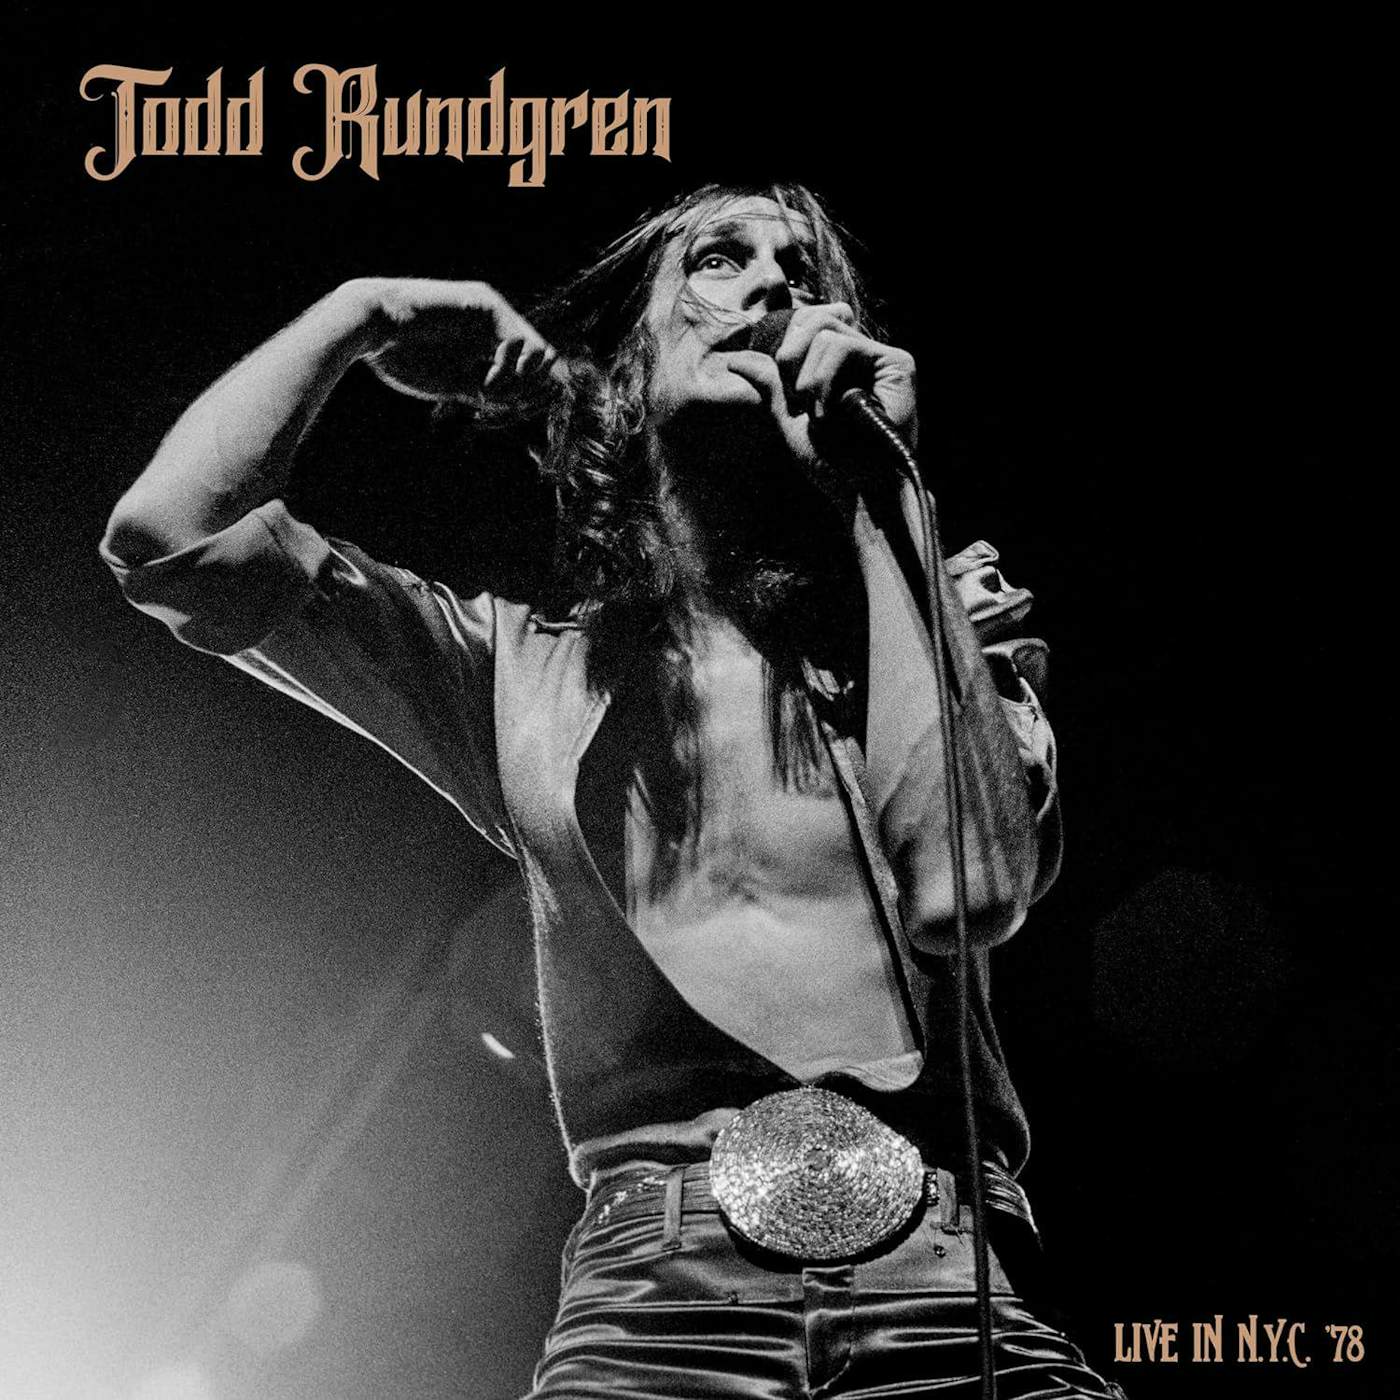 Todd Rundgren Live In Nyc '78 (Gold Vinyl) Vinyl Record